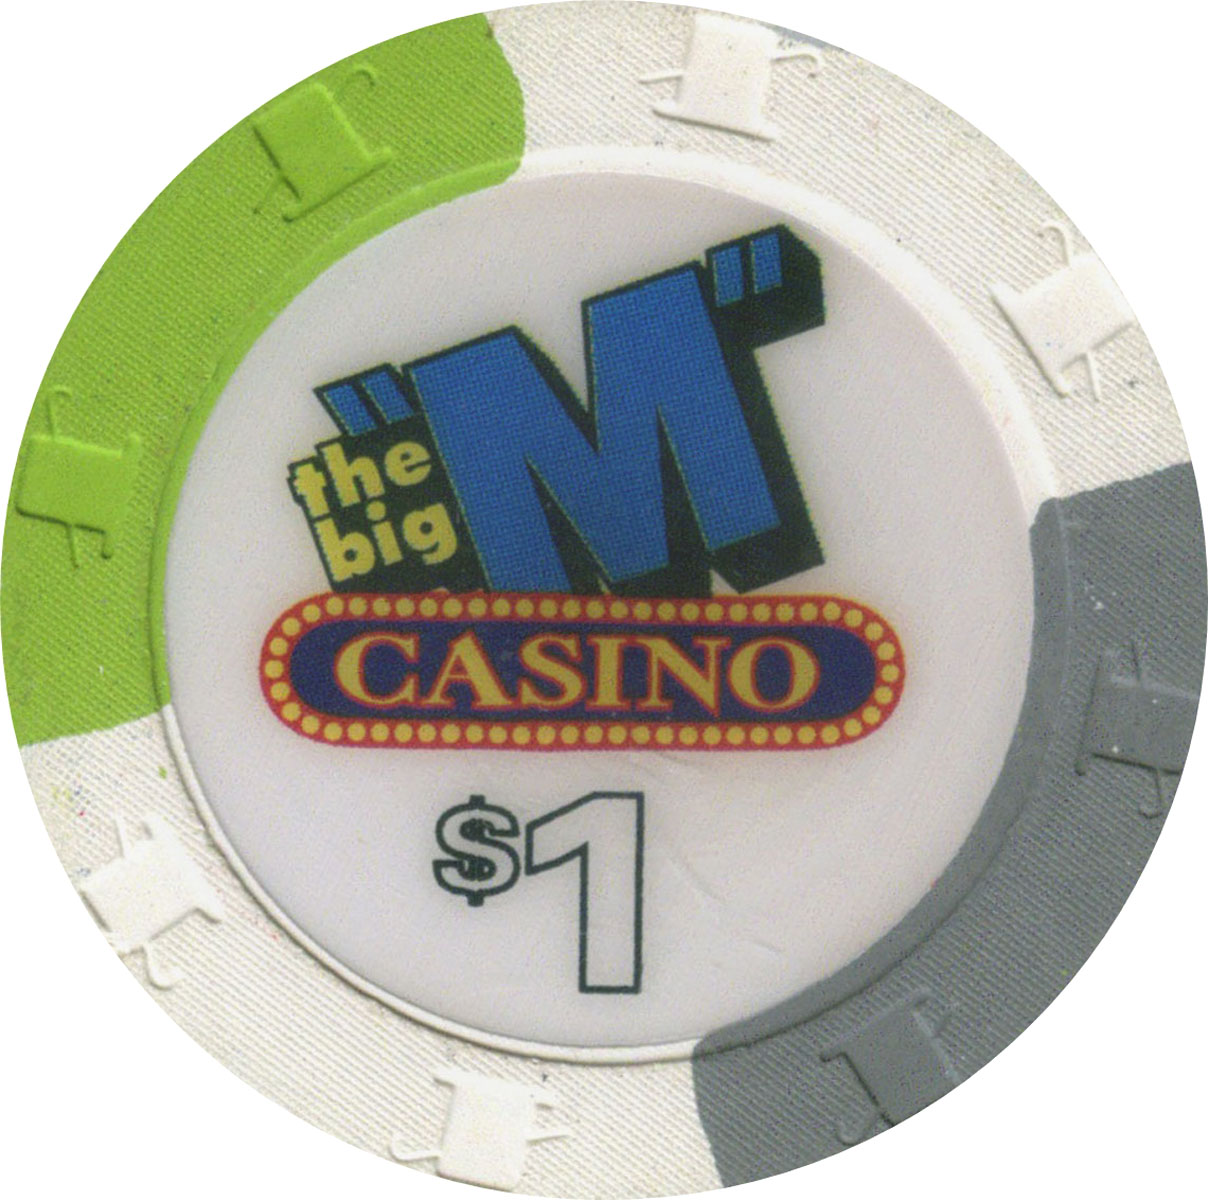 latest news on florida casino